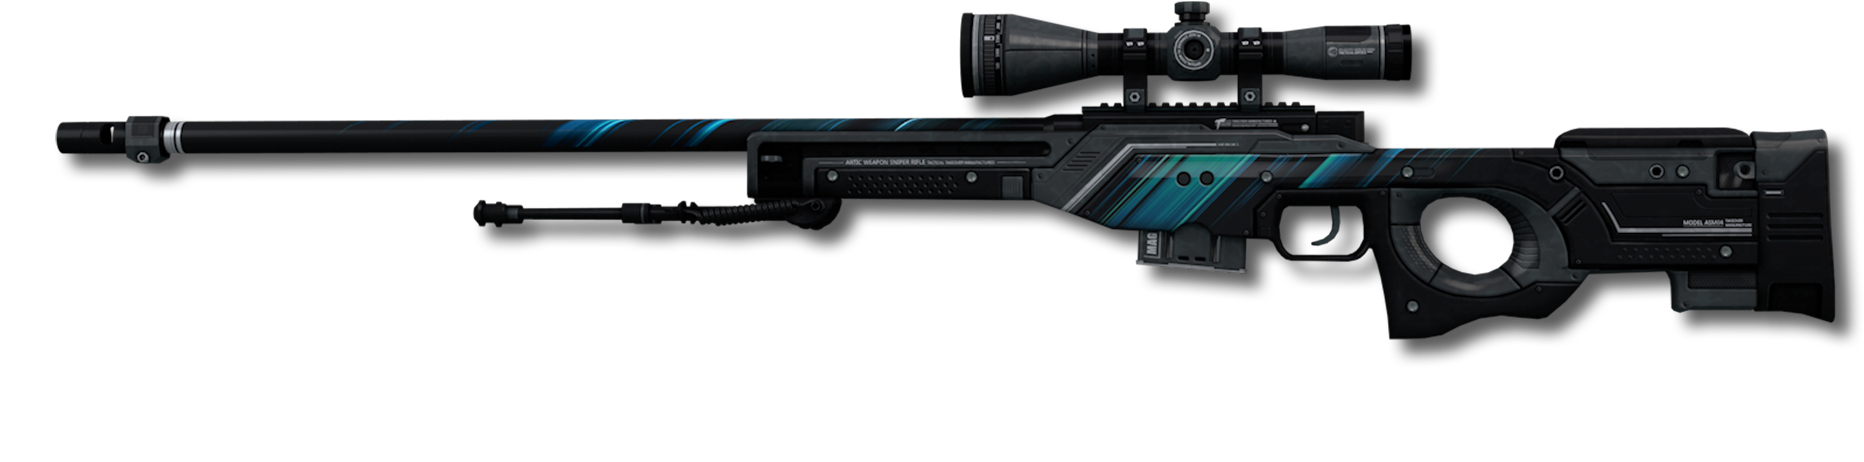 Futuristic Sniper Rifle Design PNG image